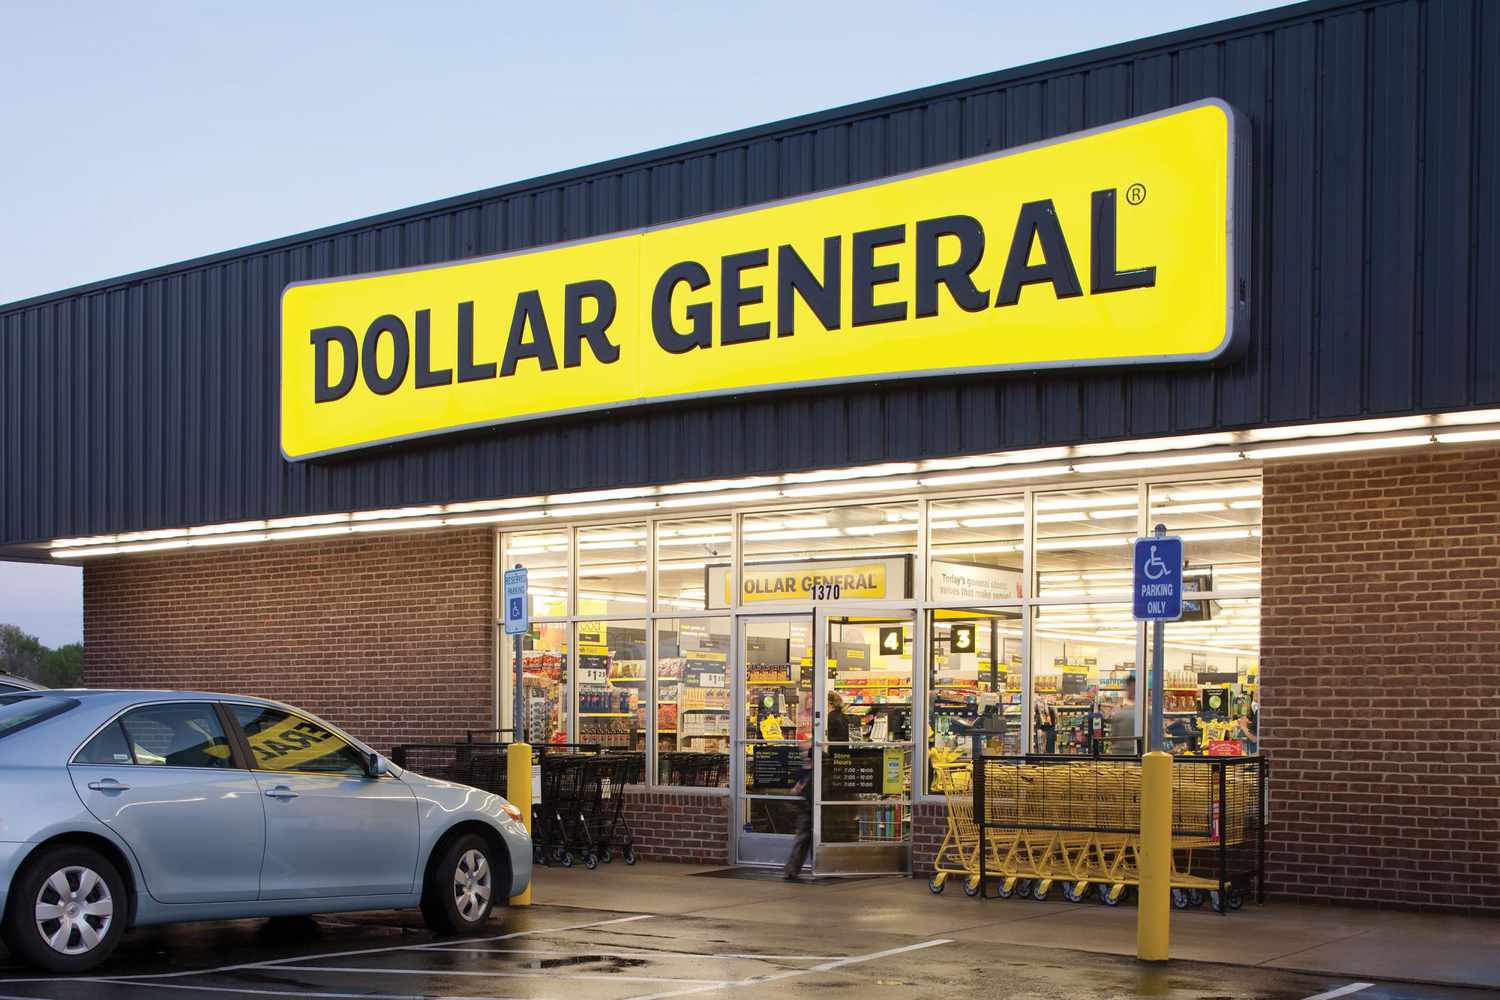 Dollar General Exterior